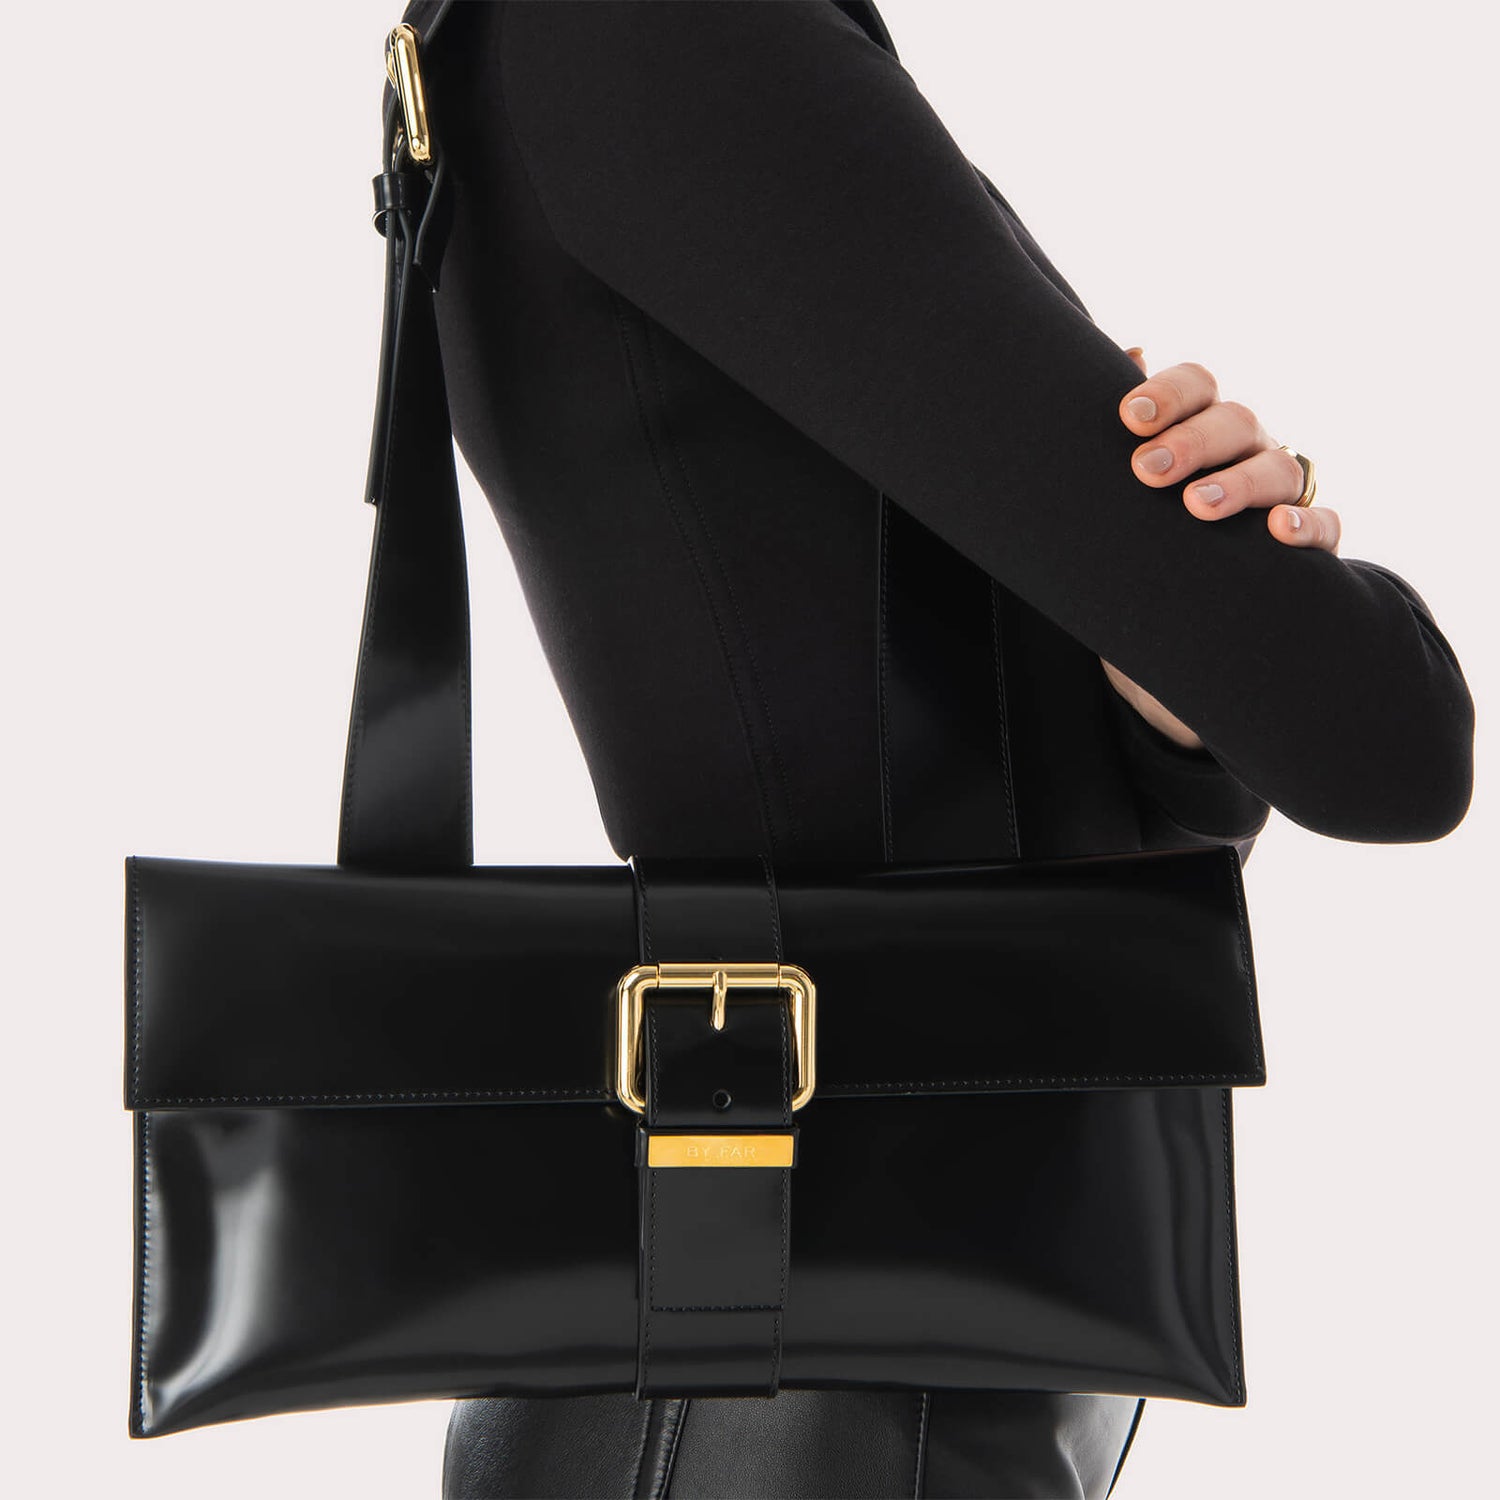 BY FAR Women's Carol Semi Patent Leather Bag - Black